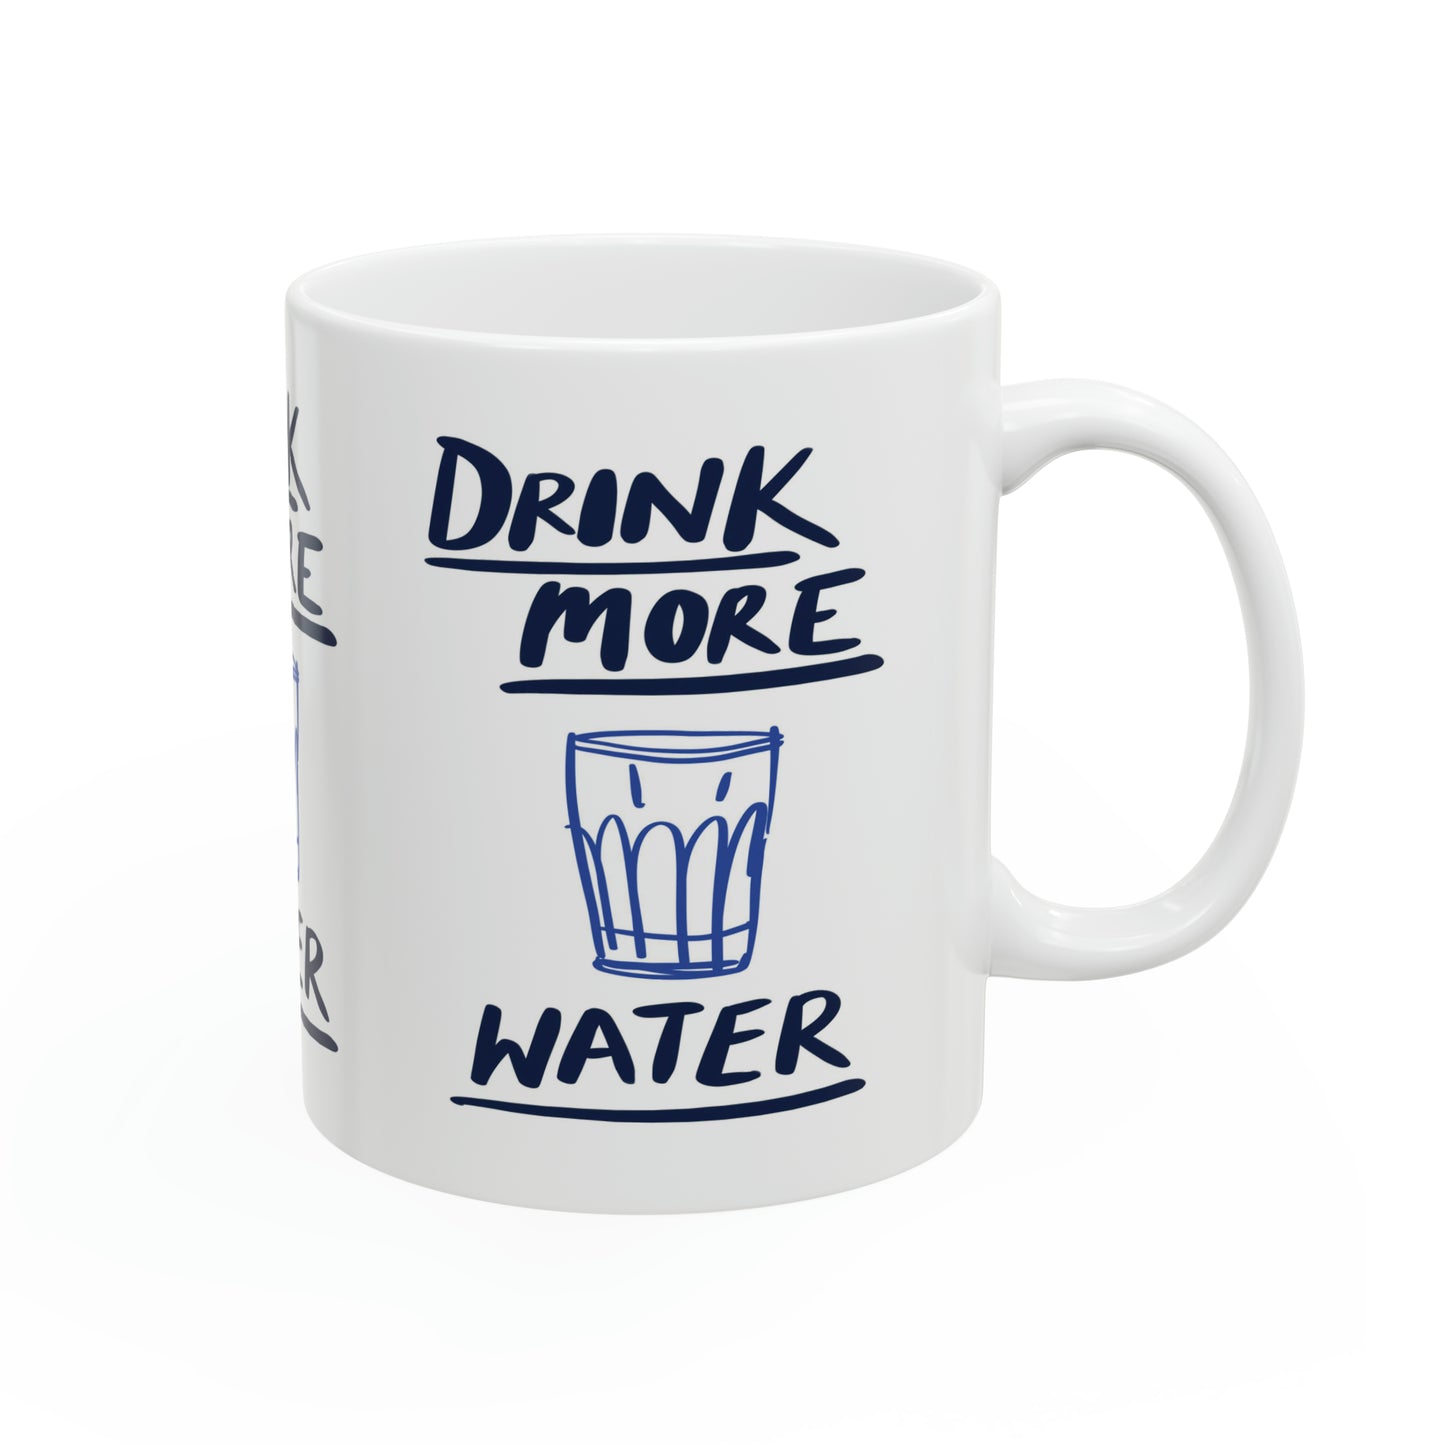 'Drink more water' Ceramic Mug, 11oz